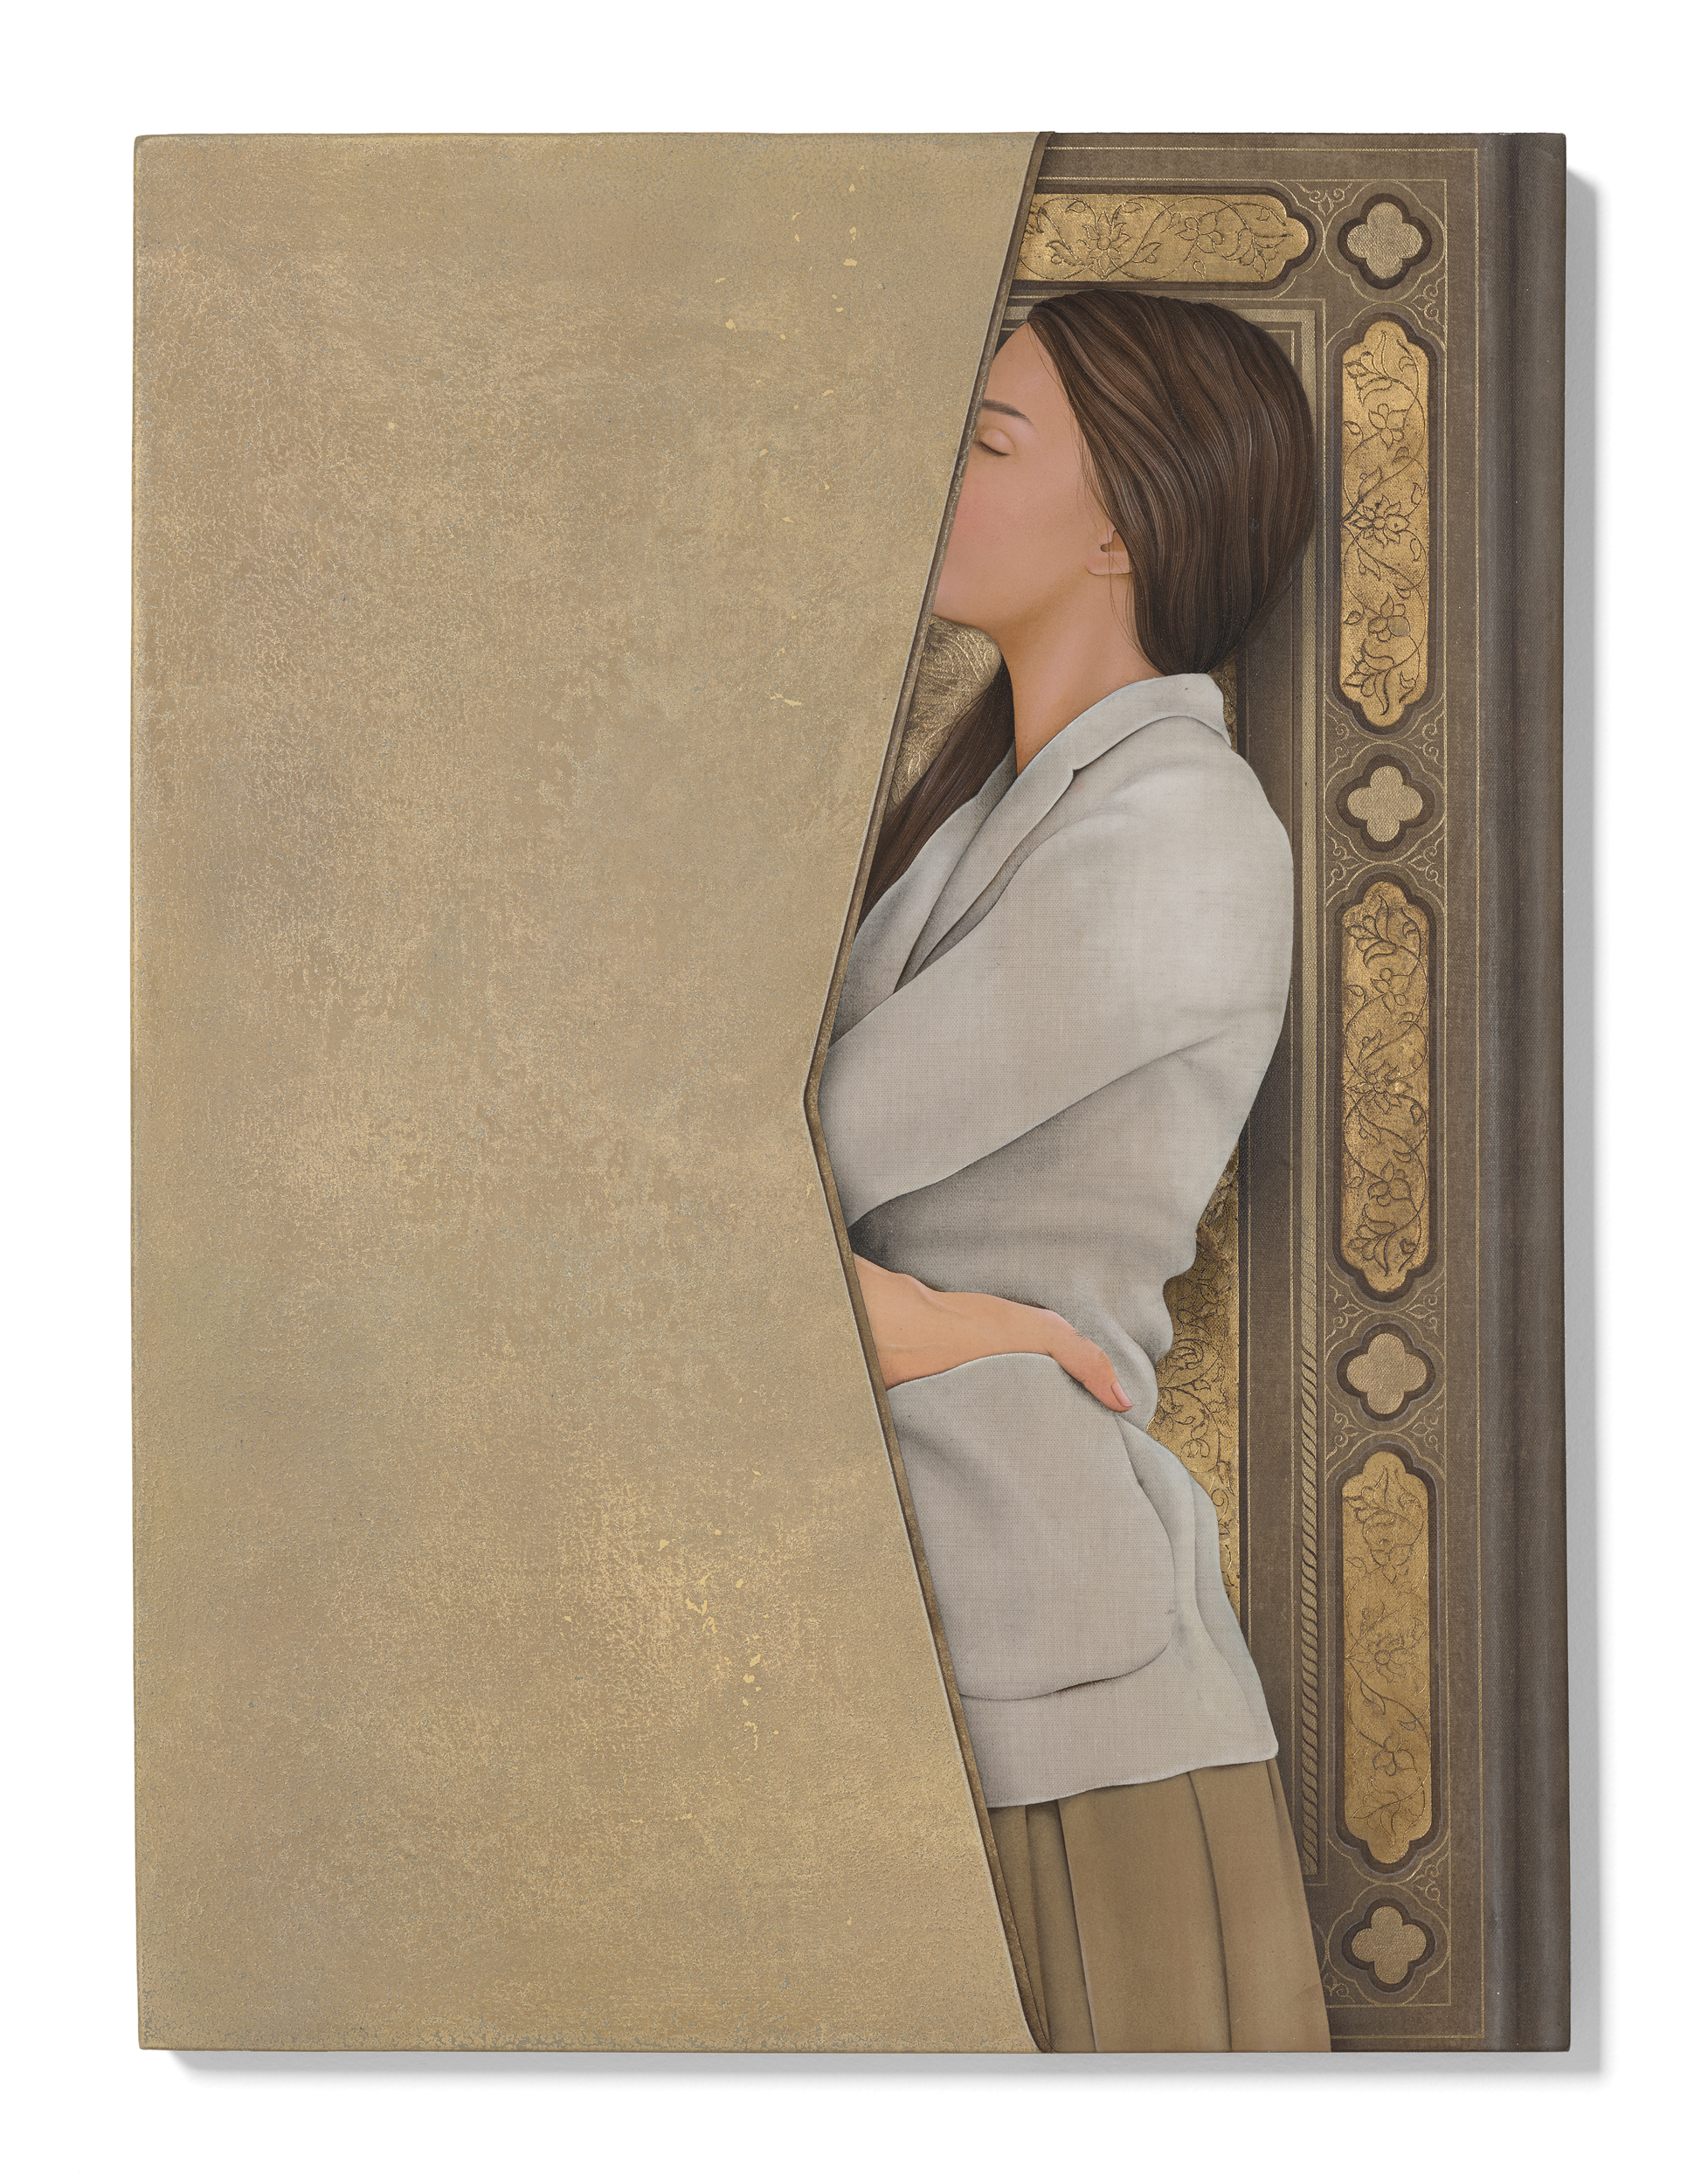 Arghavan Khosravi, ‘The Book,’ 2019. Acrylic on linen canvas over wood panel, gold leaf, 24 by 18 by 1.5in. Courtesy of the artist, © Arghavan Khosravi, 2022, photo: Julia Featheringill 